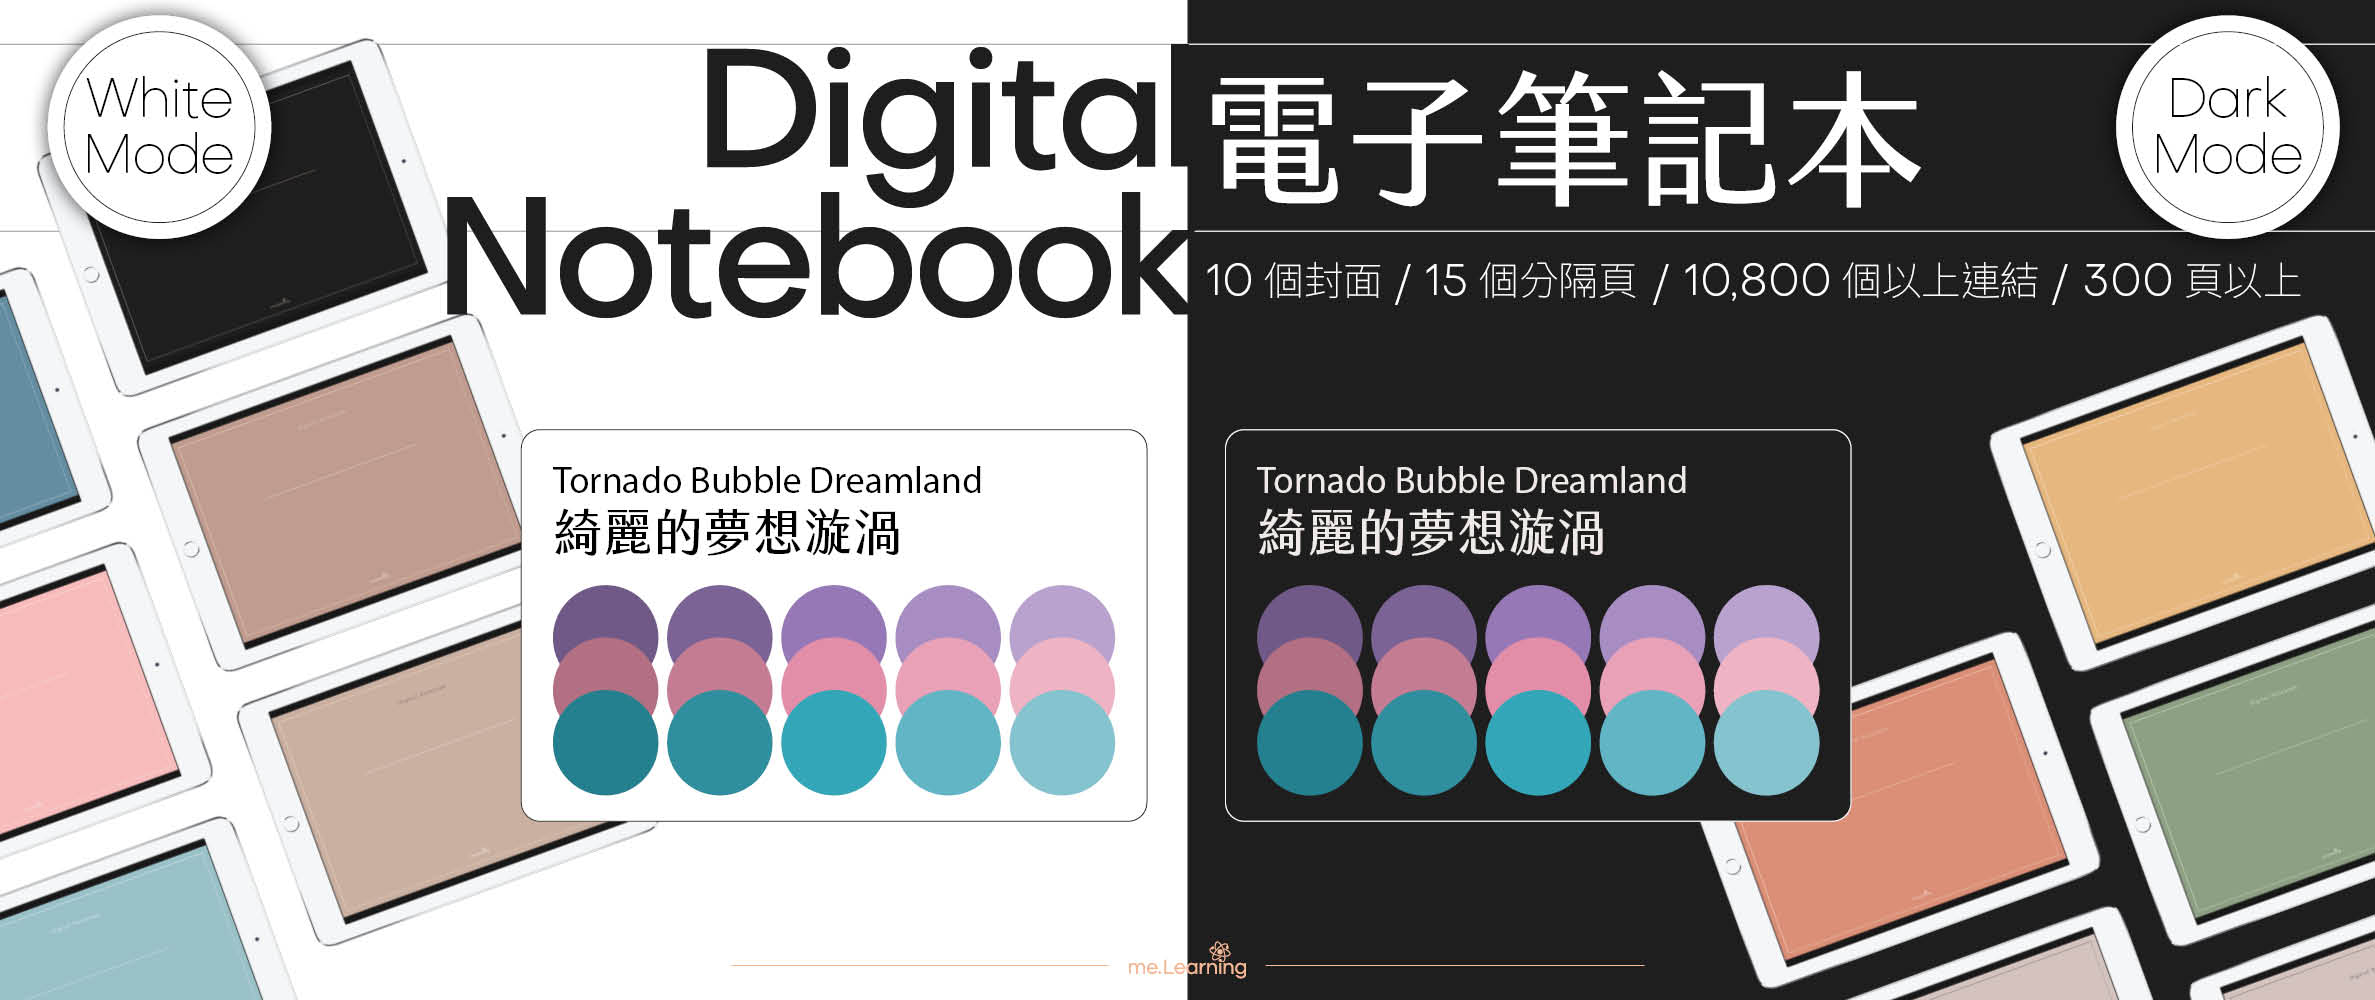 Notebook-Landscape-Solid Color Cover-15 Tabs-Tornado Bubble Dreamland 不想念書時上市 | me.Learning